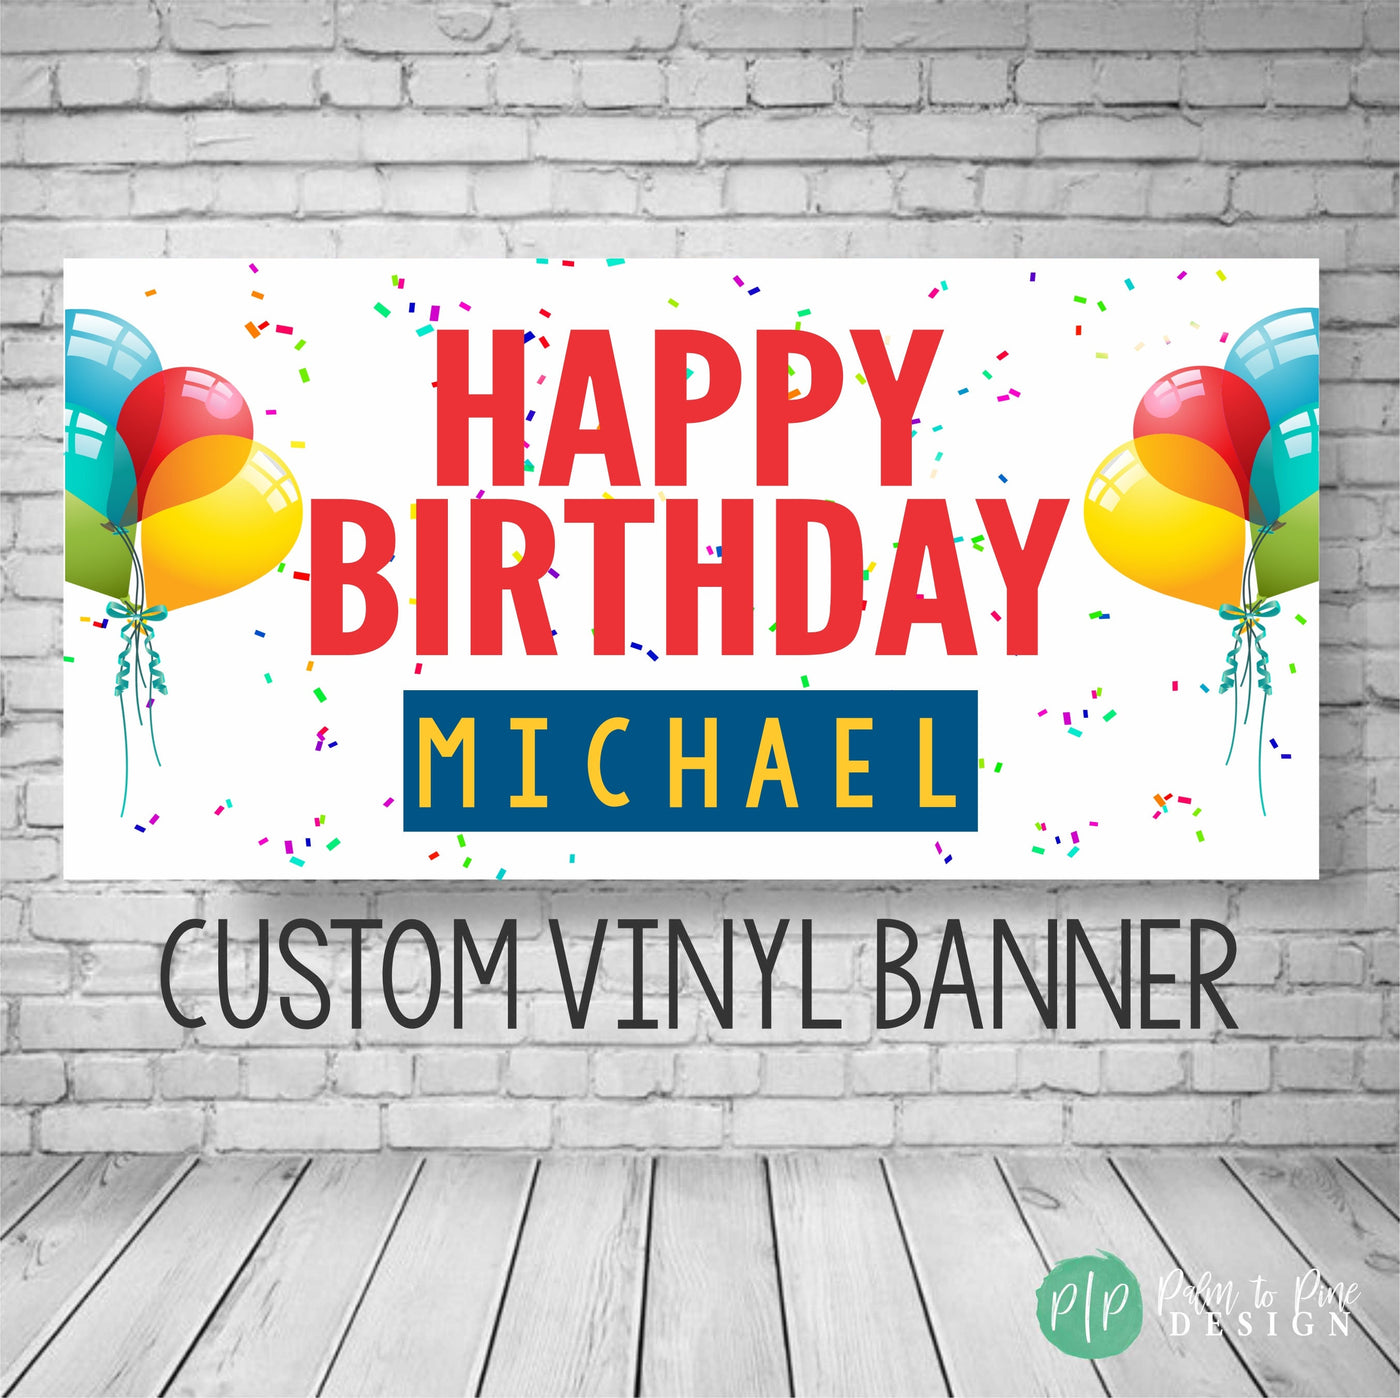 Happy birthday banner personalized, Birthday Banner for yard, Custom birthday banner, yard banner, birthday yard decorations, Birthday Sign